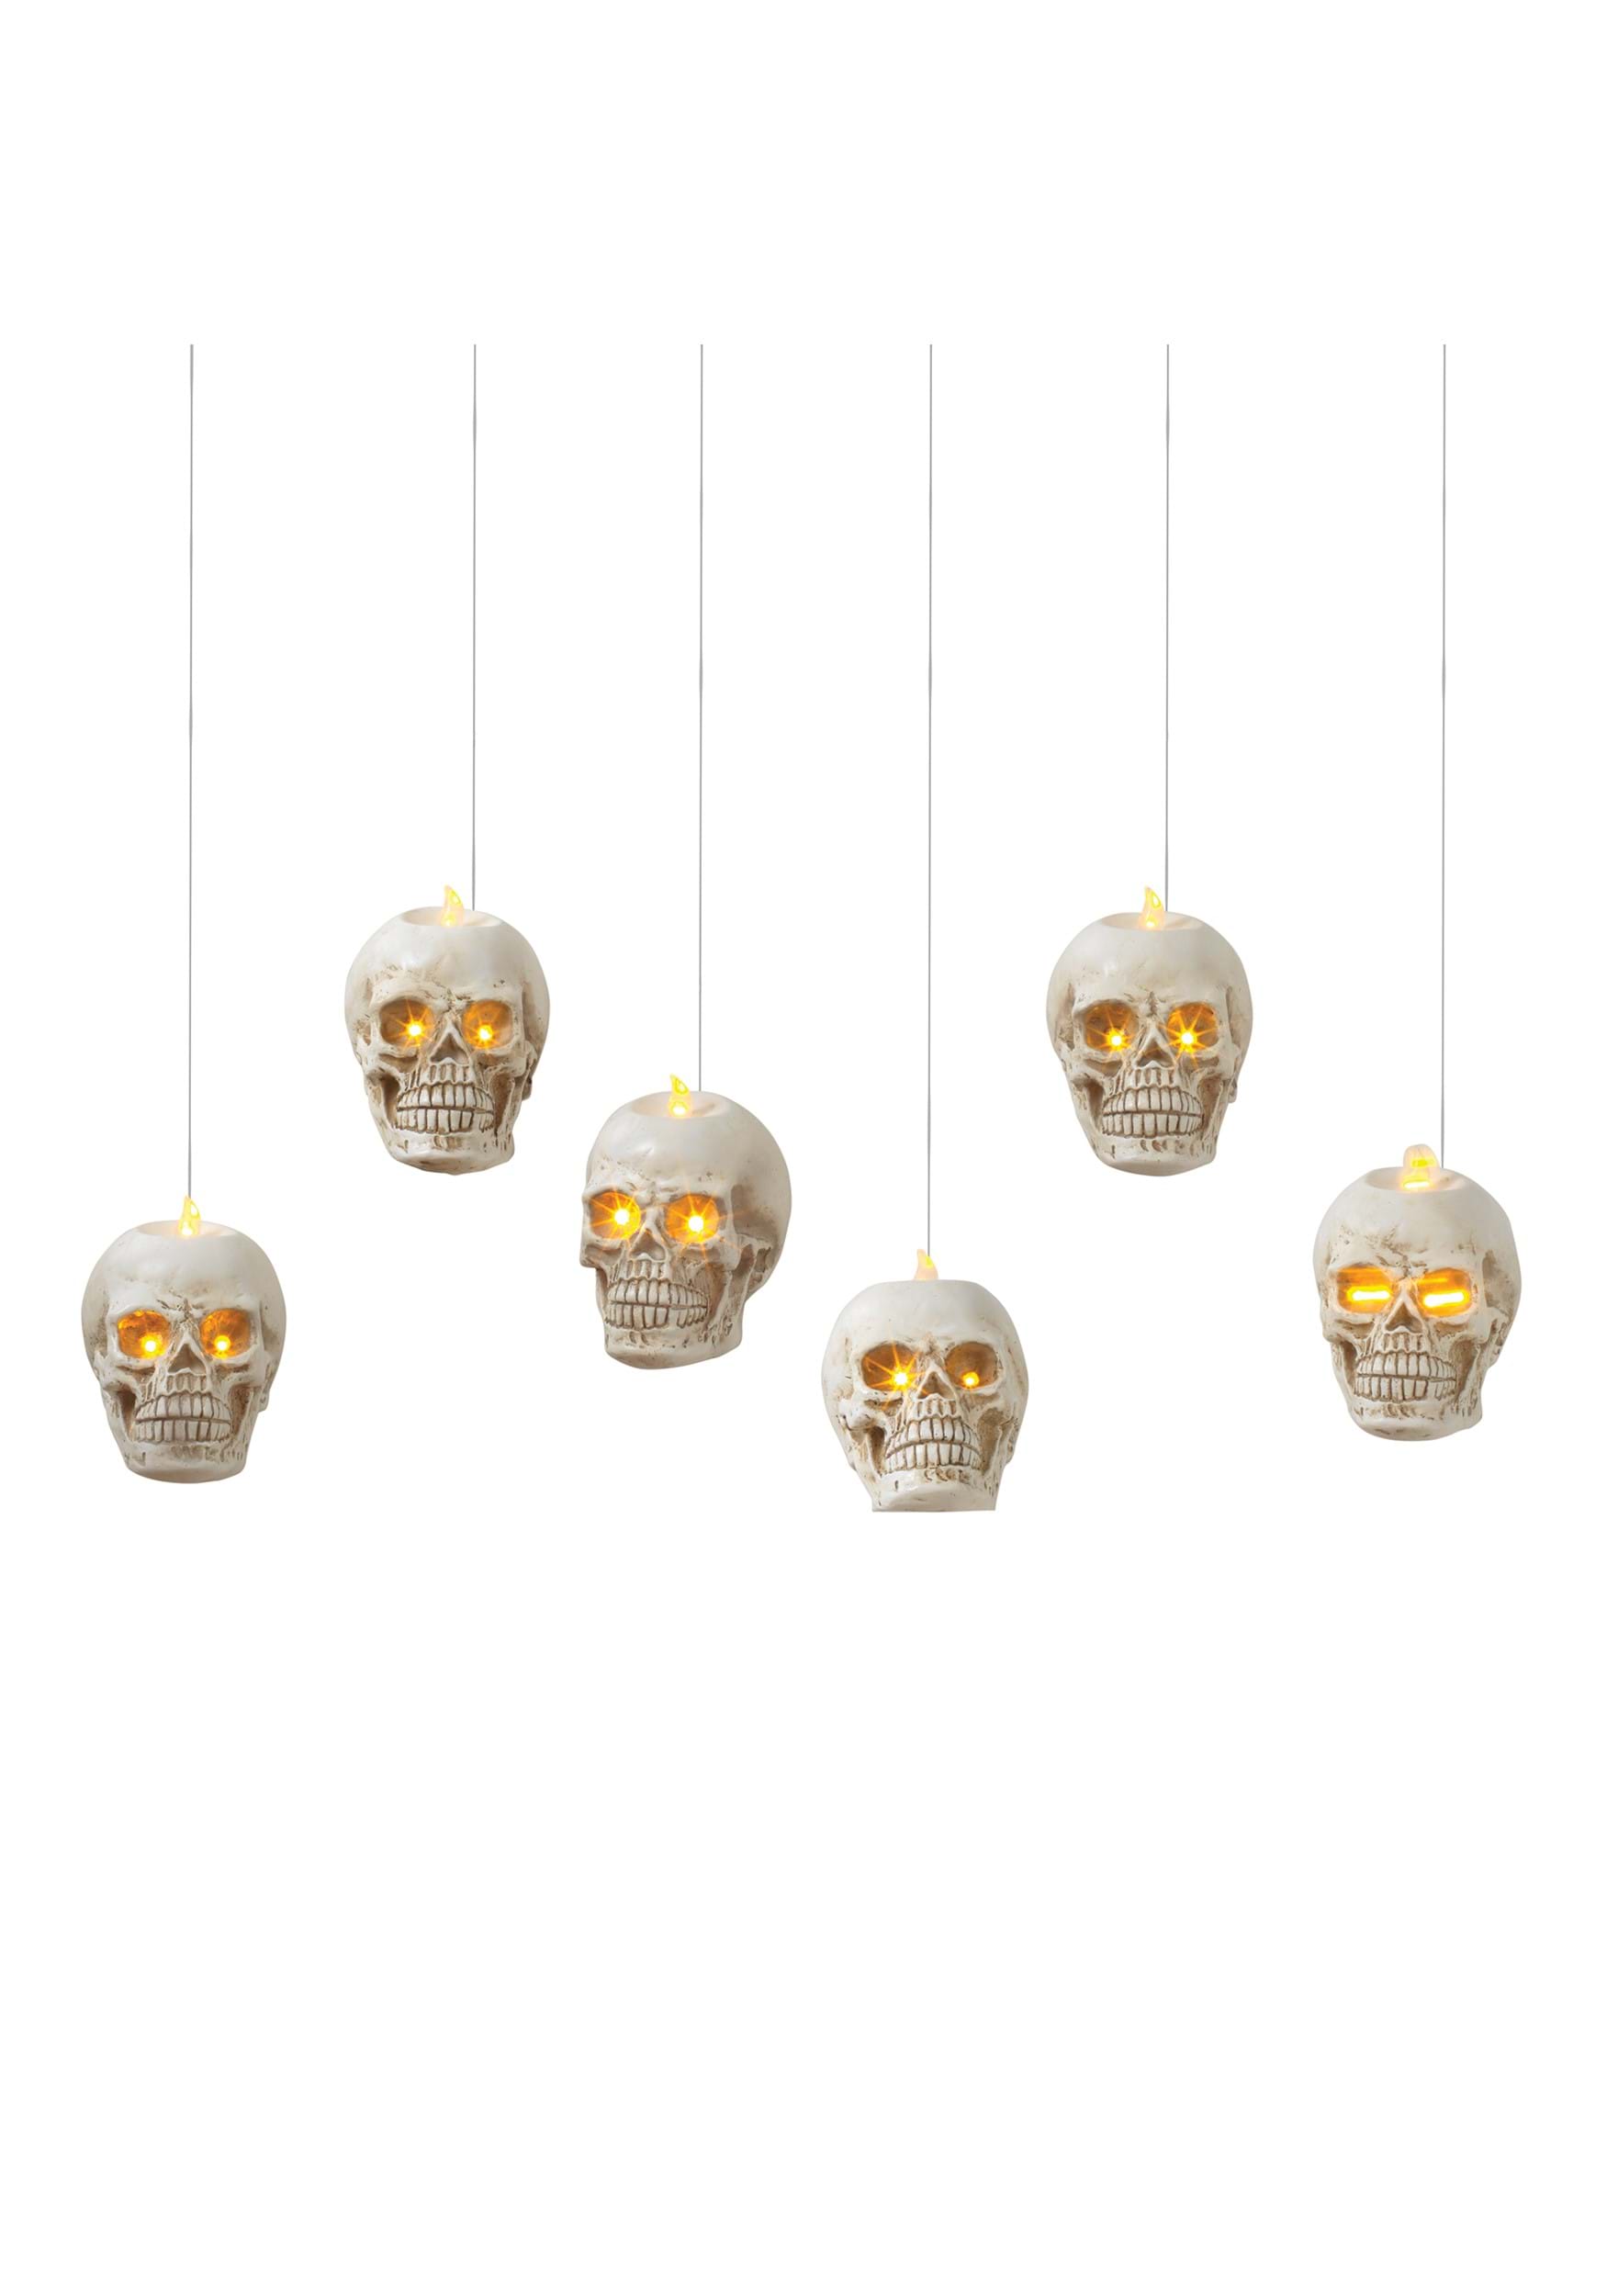 6 Light Up Hanging Skulls Prop With Remote Control , Halloween Lights